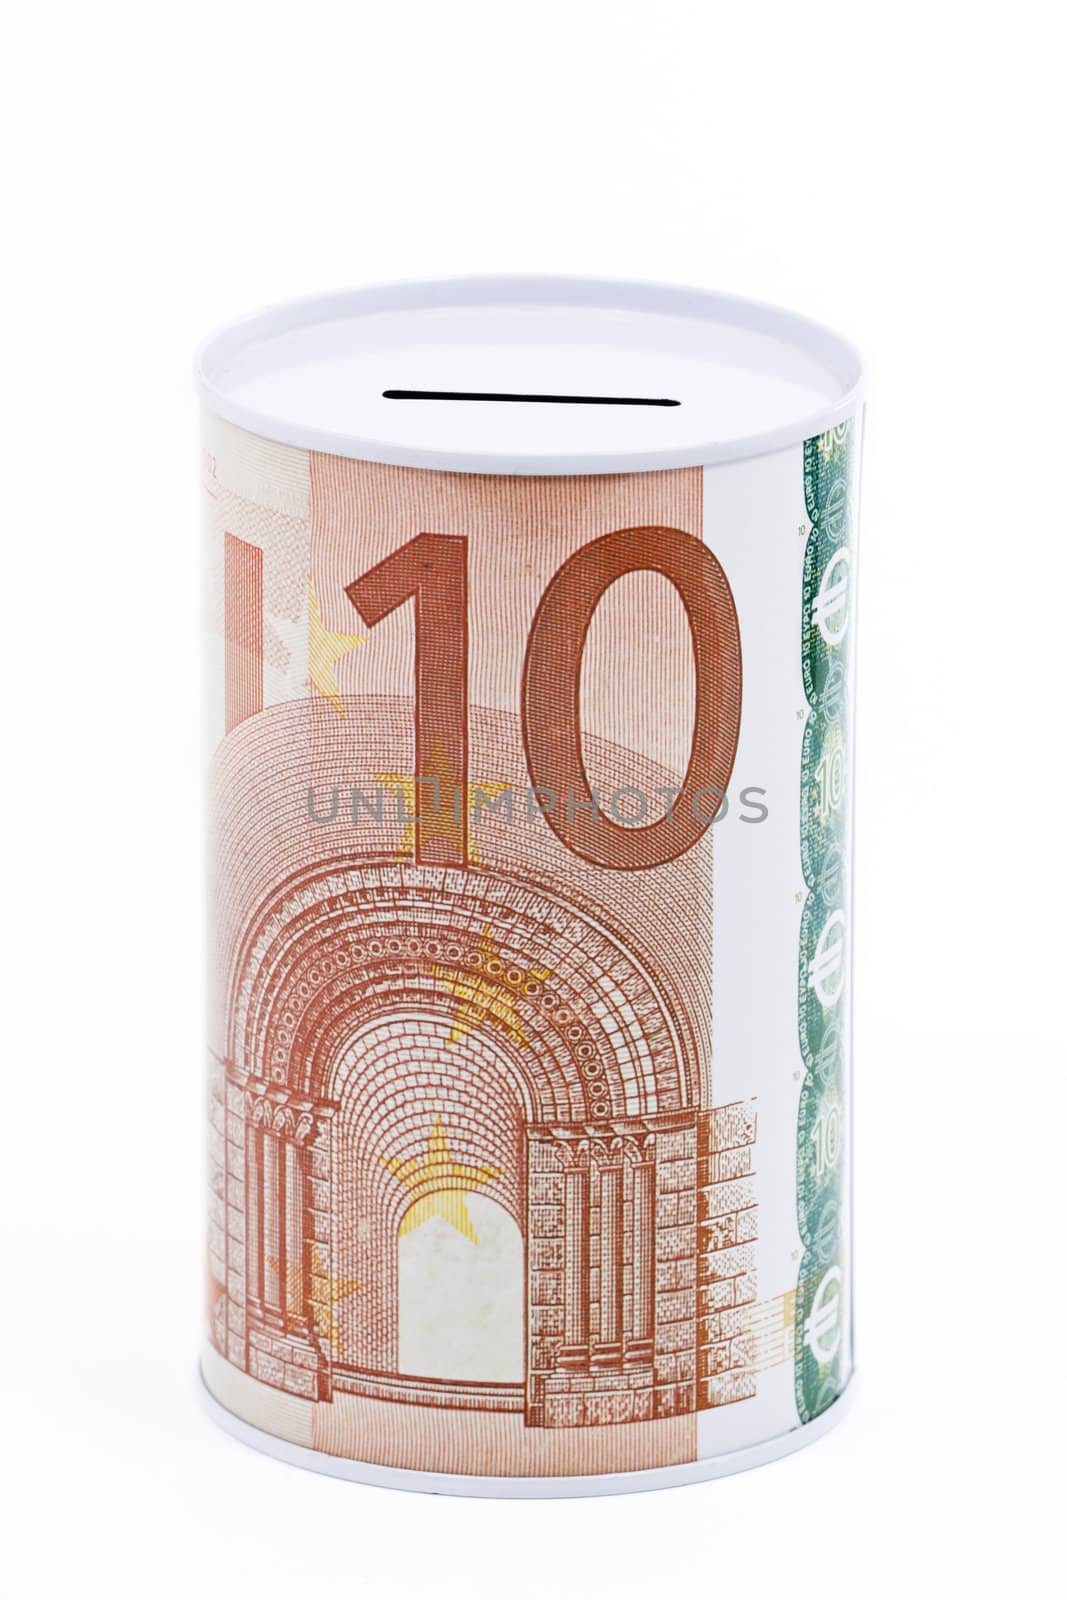 Money savings bank, box wrapped with euro